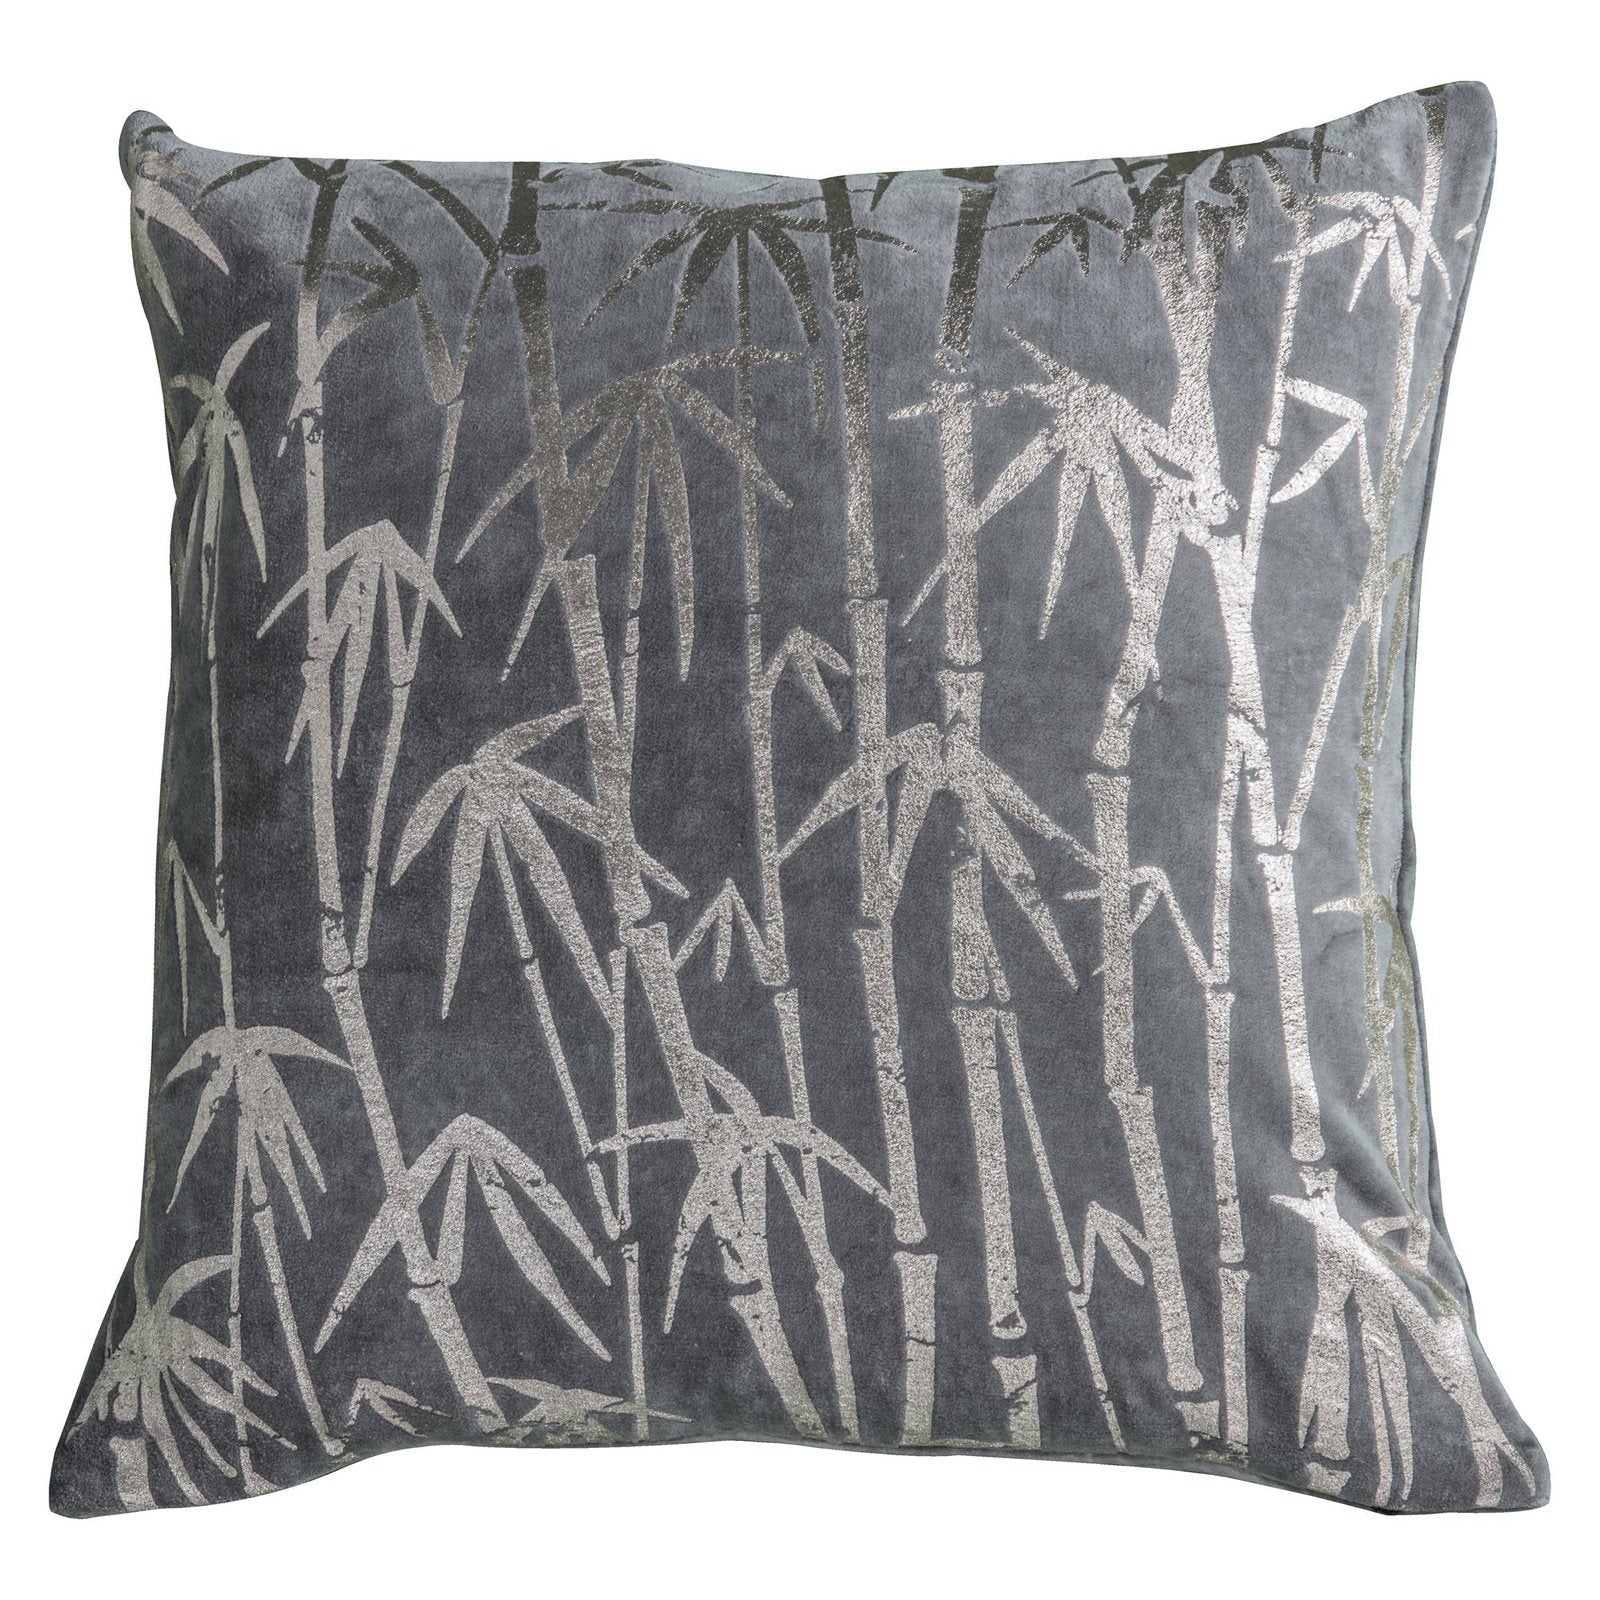 Bamboo Palm Grey Metallic Cushion - 100% Cotton - Knife Edge Seams